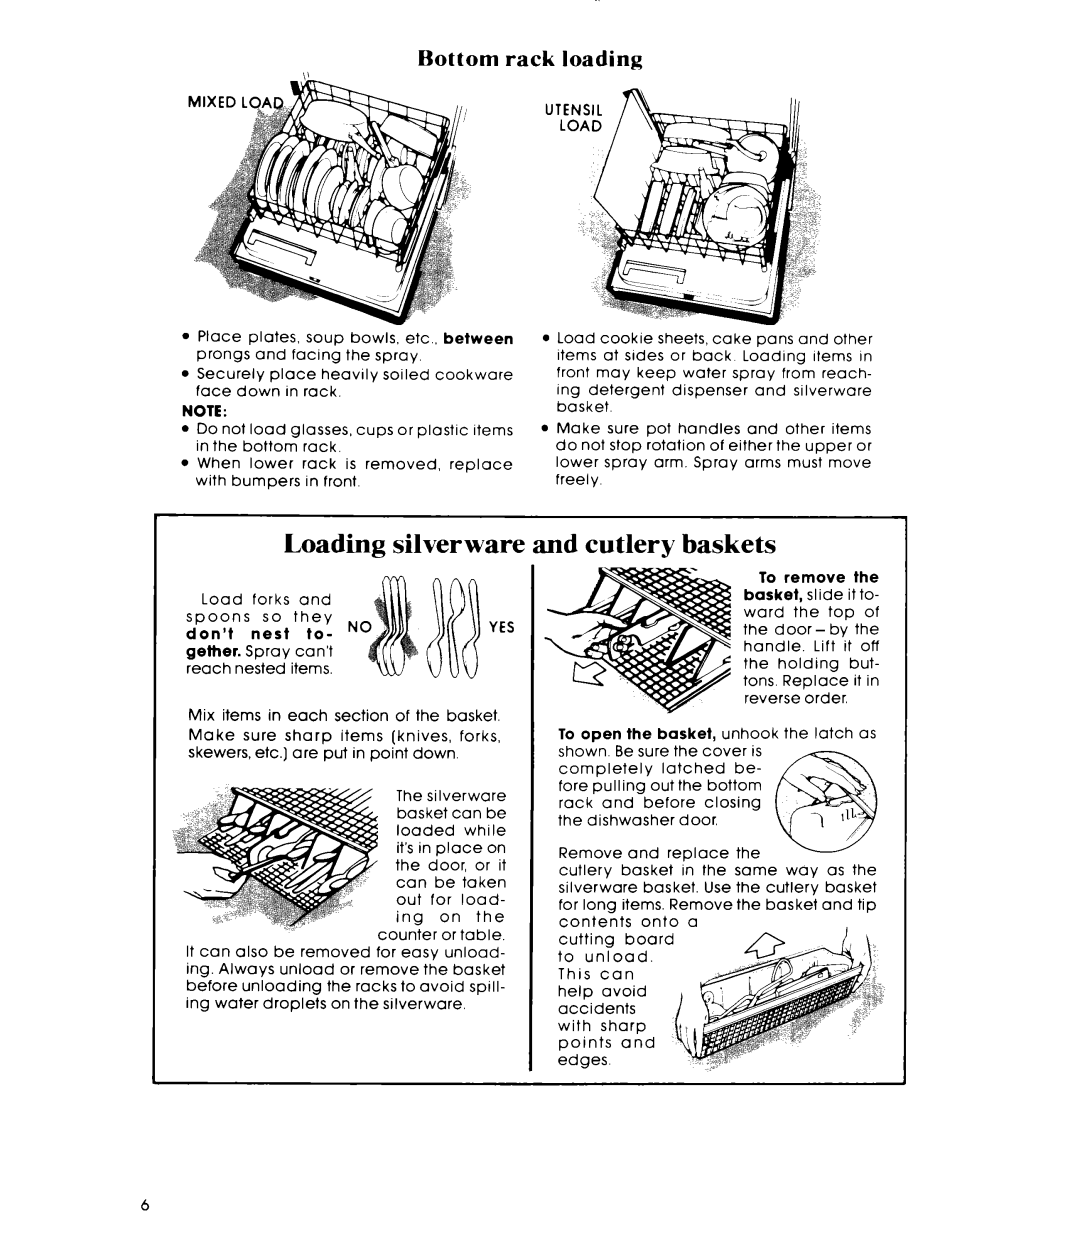 Whirlpool DU9700XR manual Loading silverware, and cutlery baskets, Bottom rack loading 